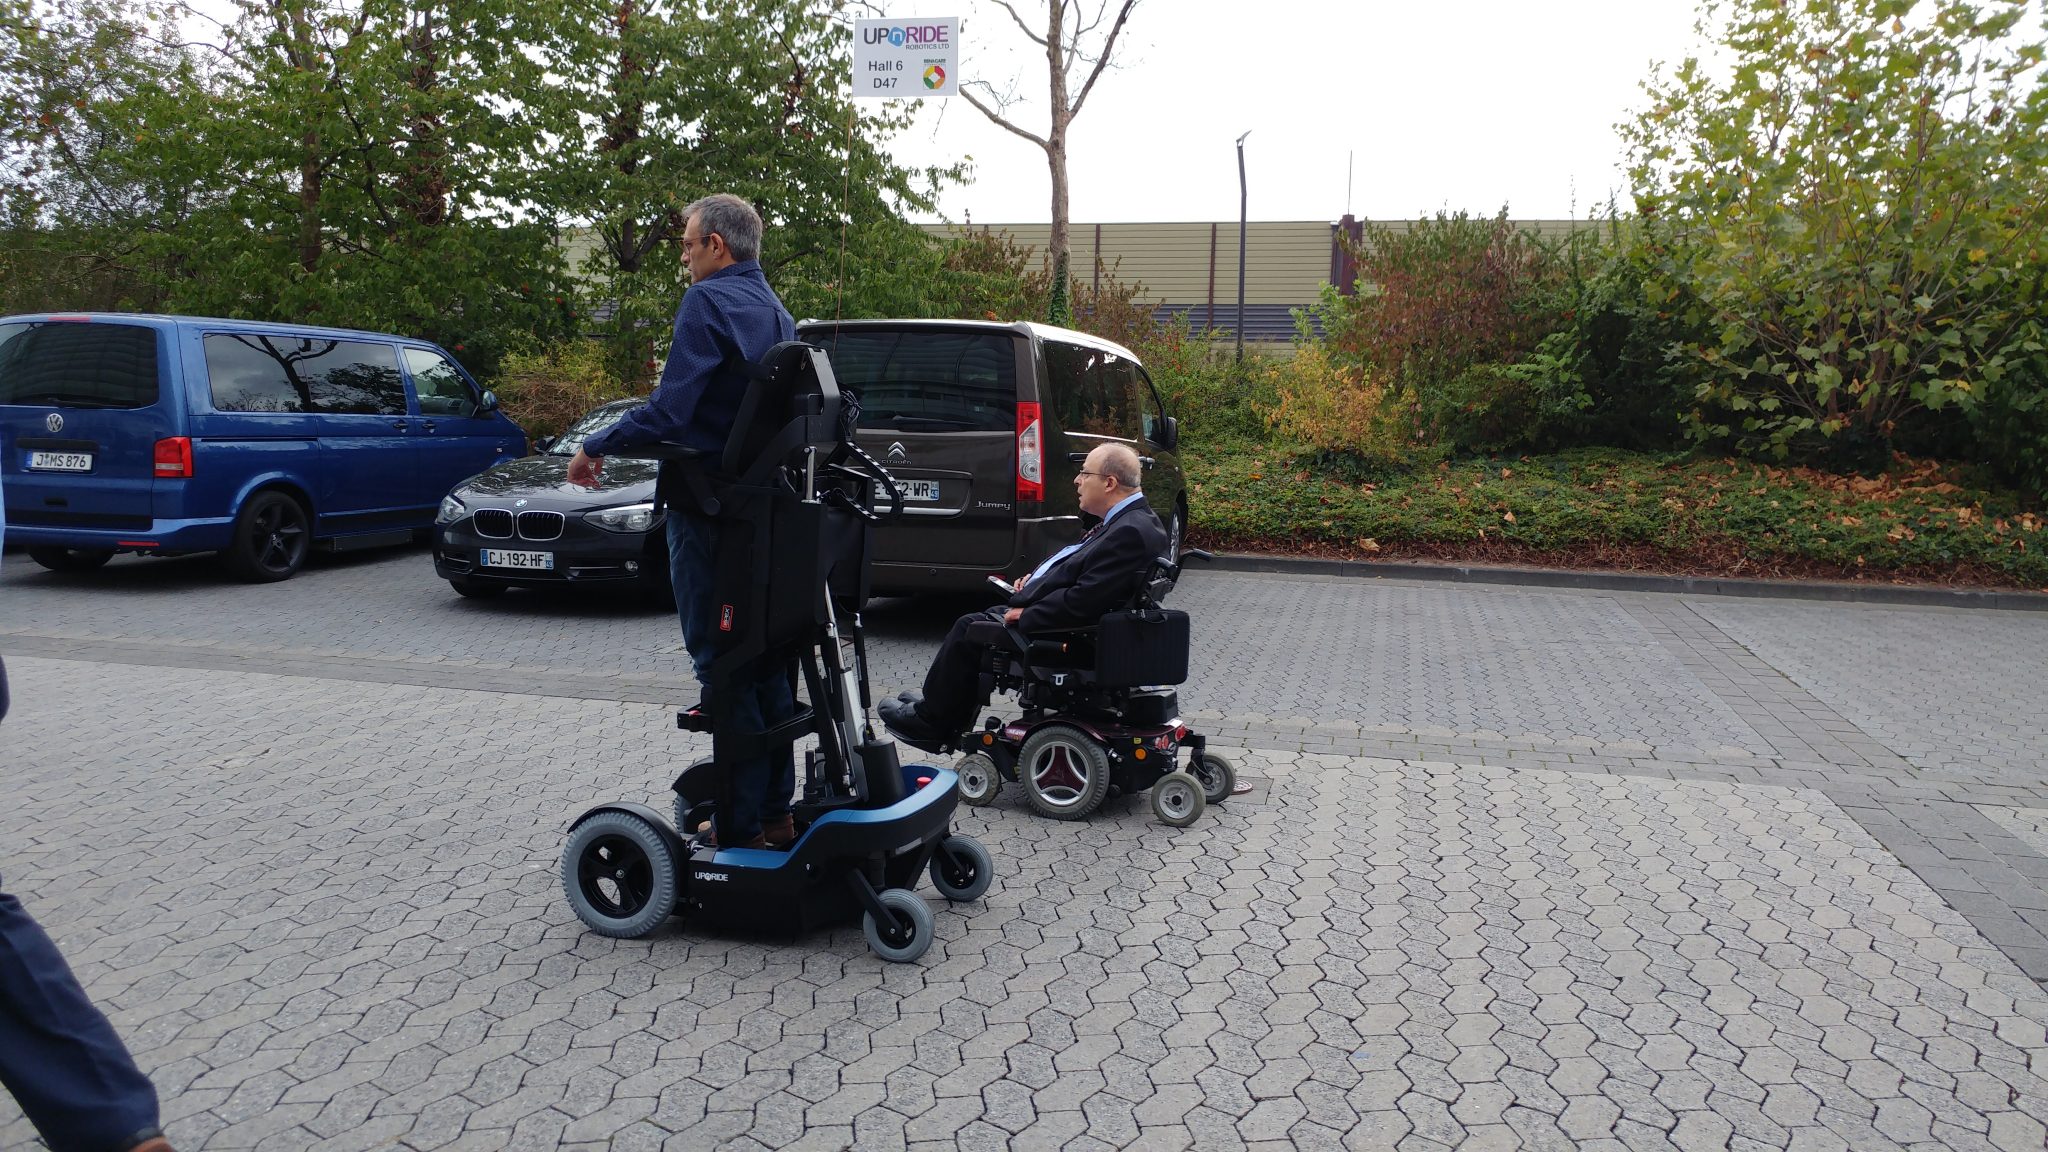 UpnRide Israeli startup for upright wheelchair testing the product on urban terrain